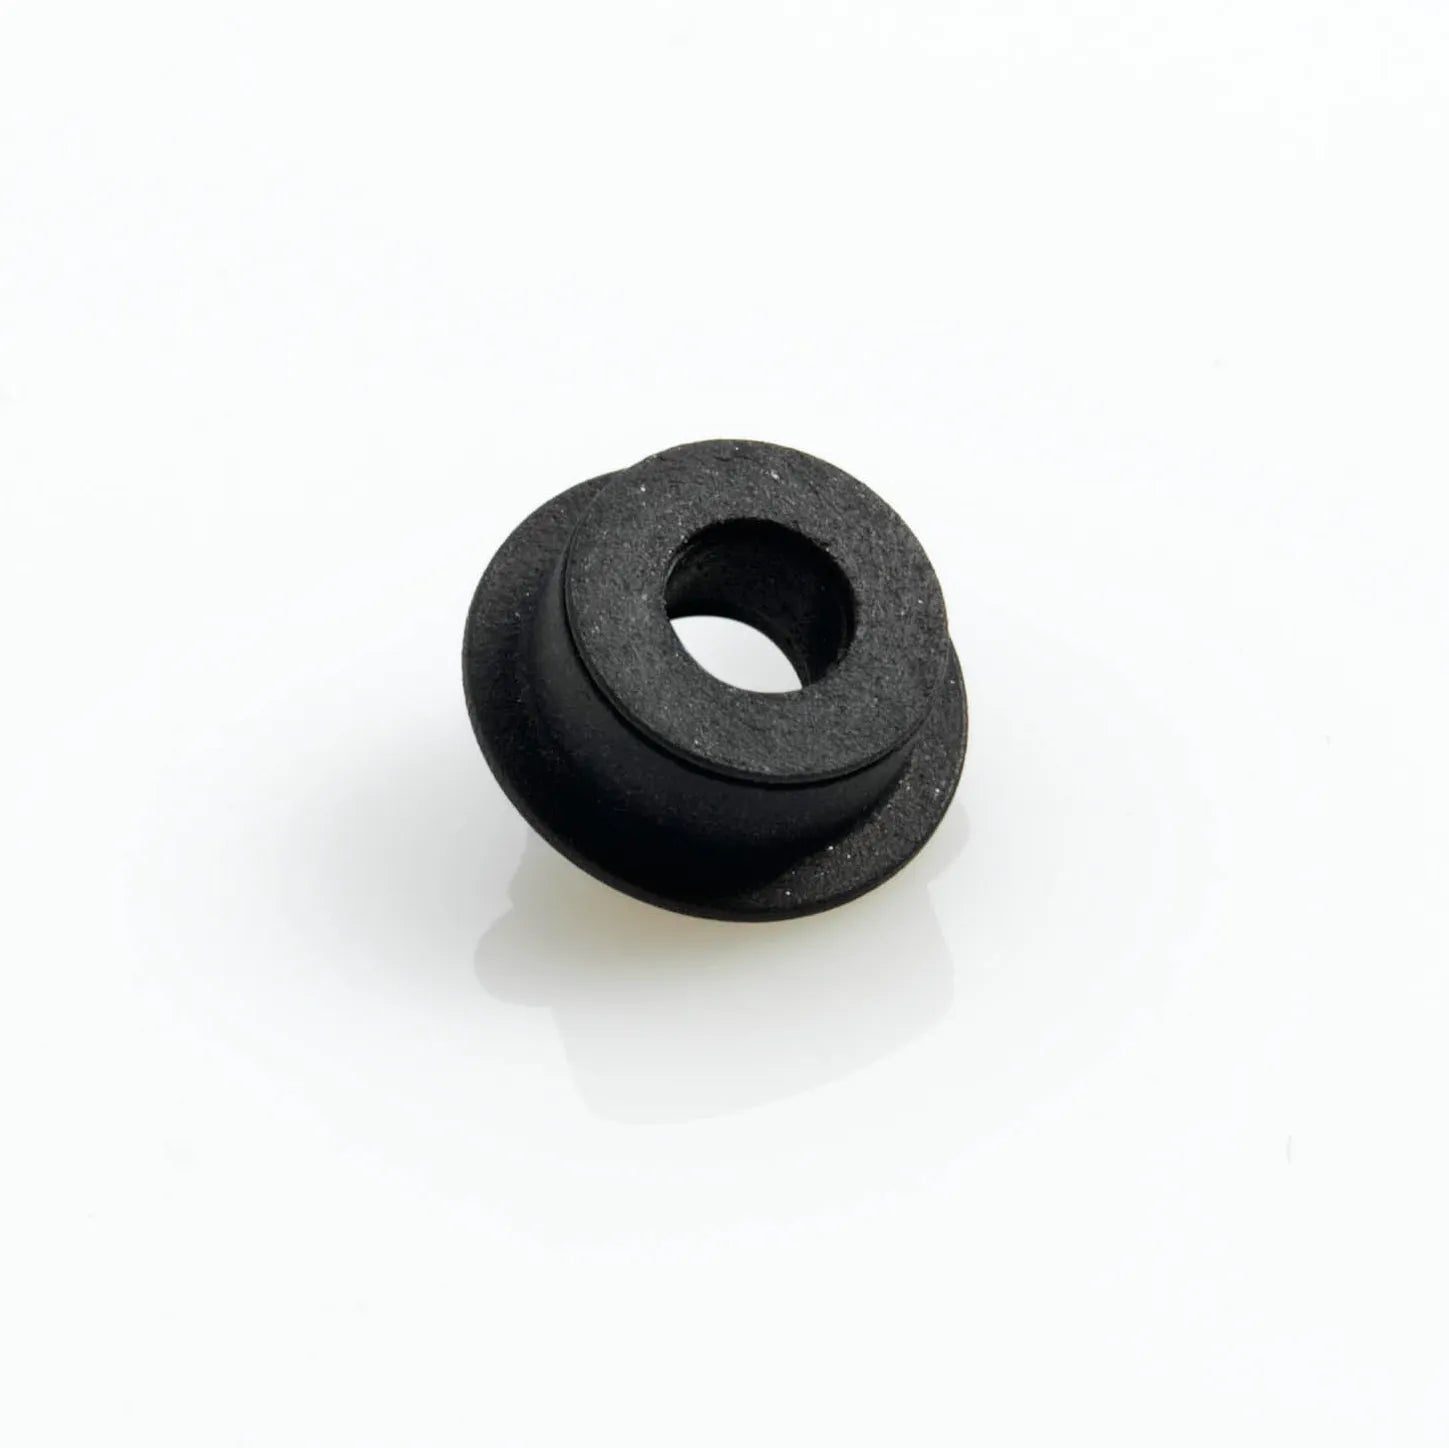 Pump Seal, Black, Comparable to Hitachi # 655-1080